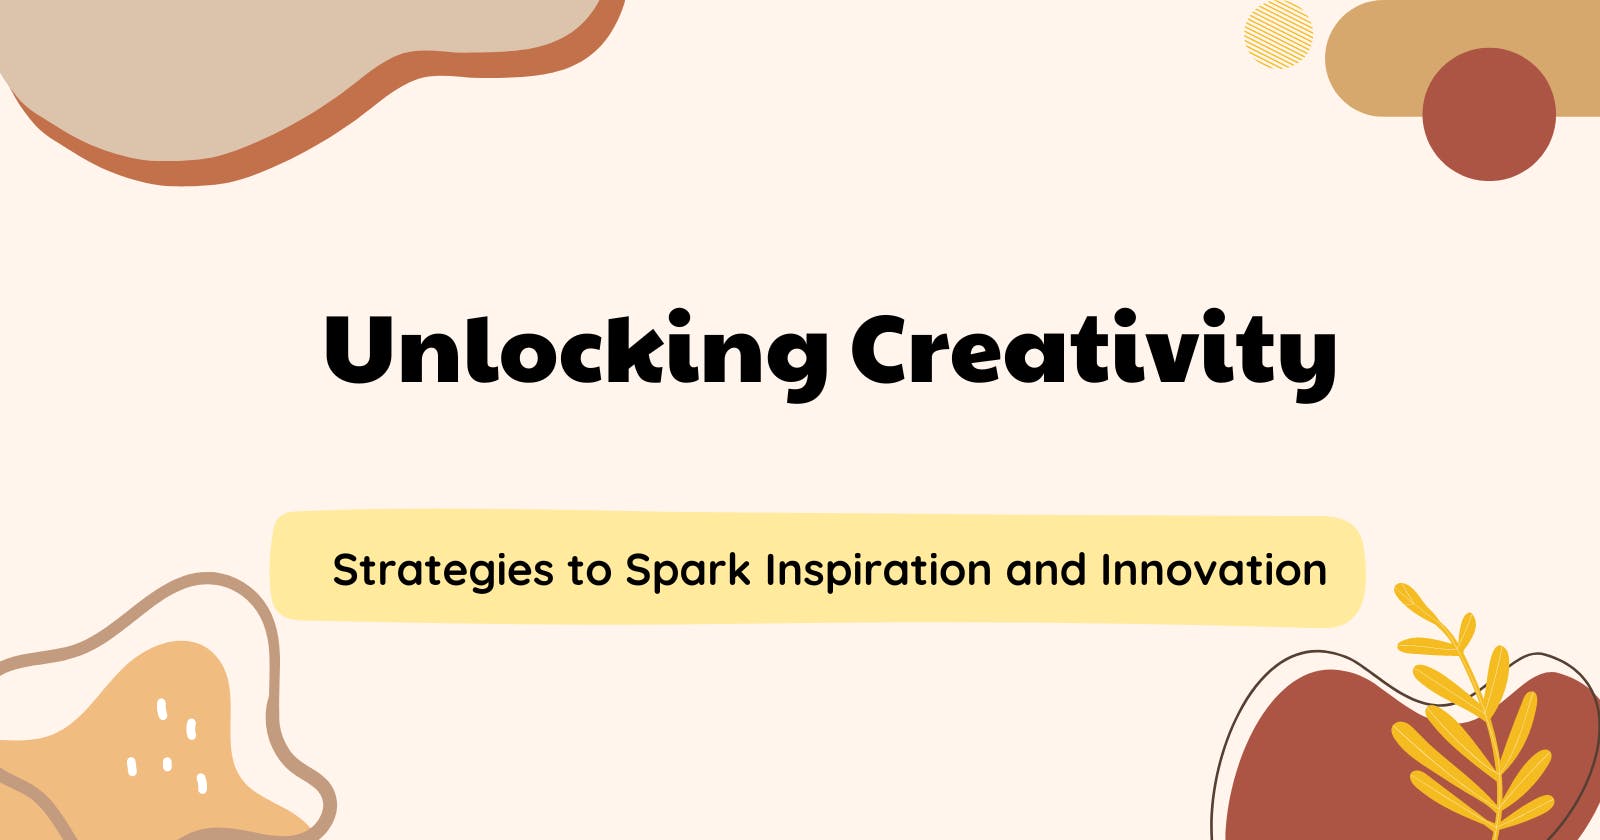 Unlocking Creativity: Strategies to Spark Inspiration and Innovation